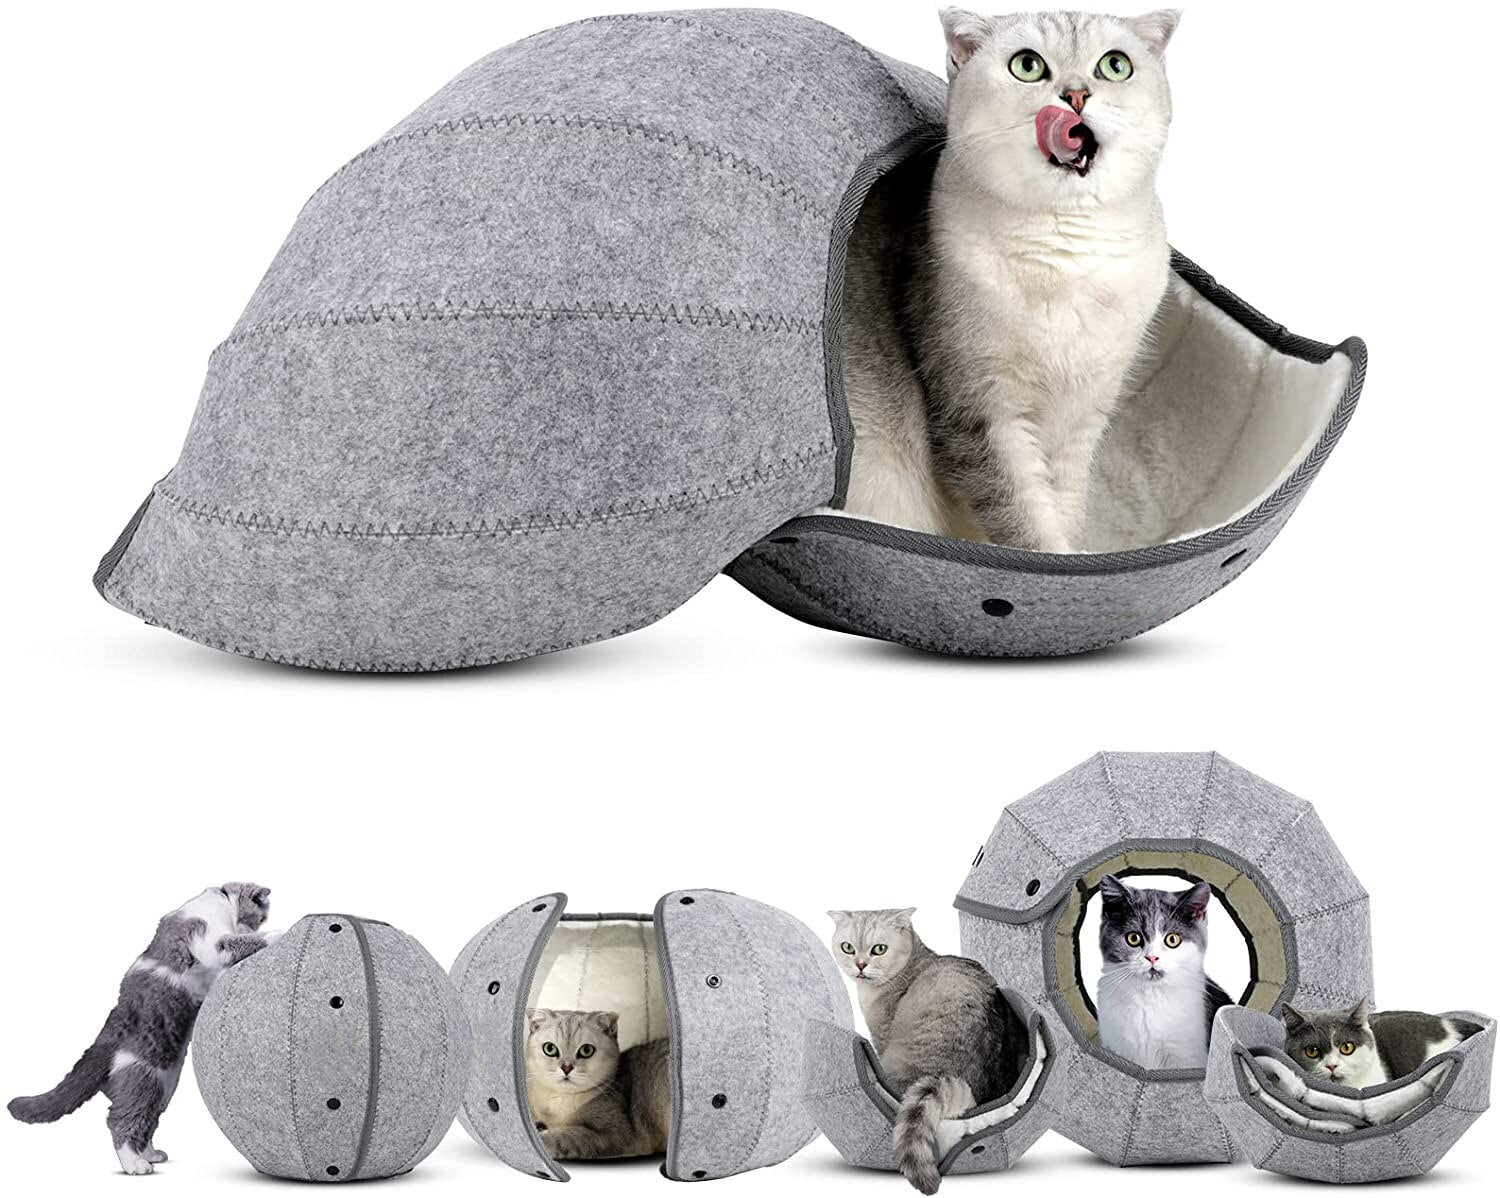 Spherical foldable multiplayability cat bad - Nekoby Spherical foldable multiplayability cat bad